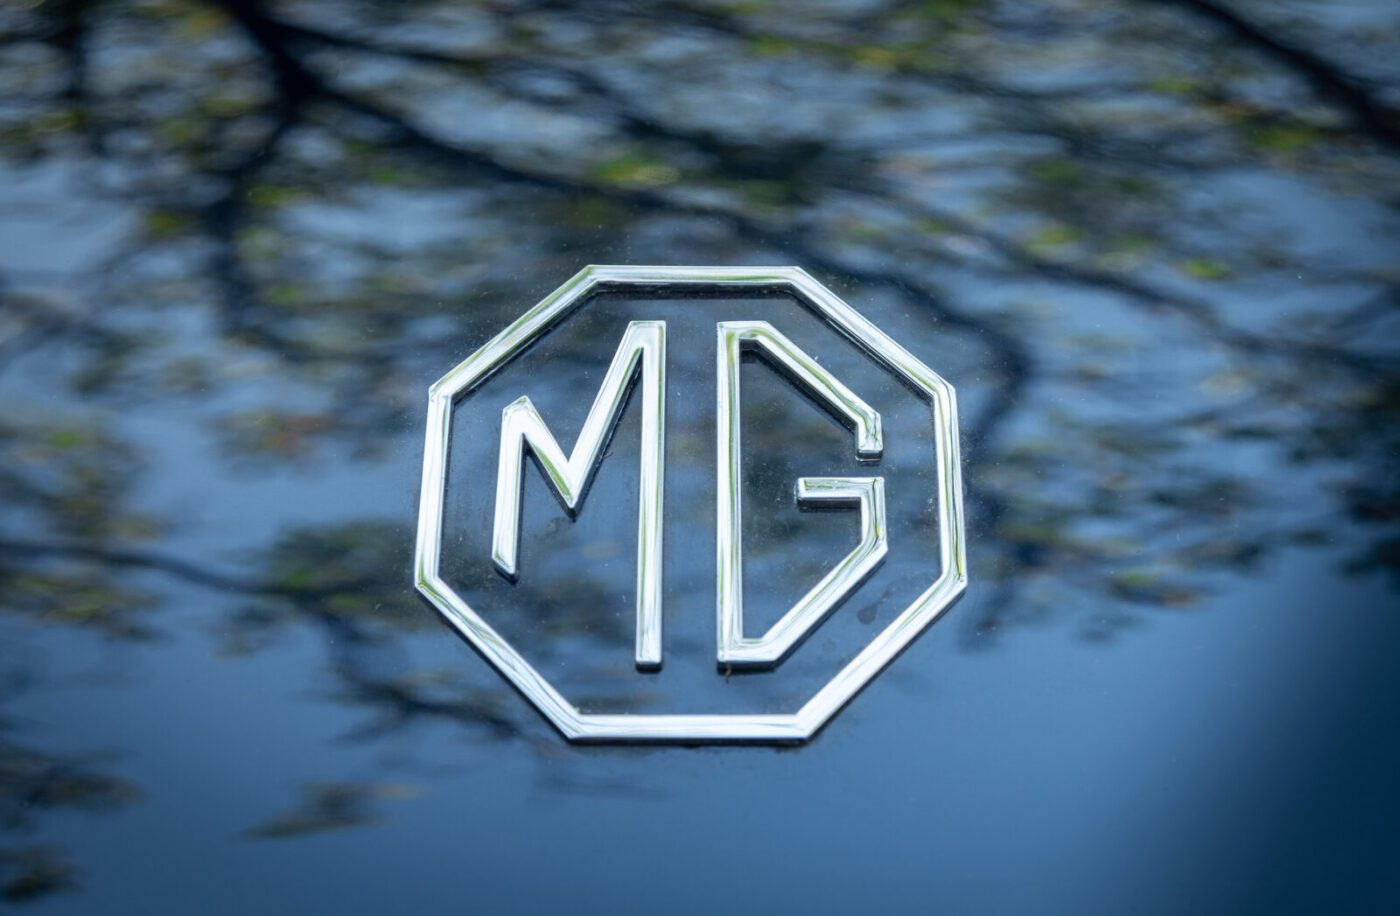 MG Magnette boot badge